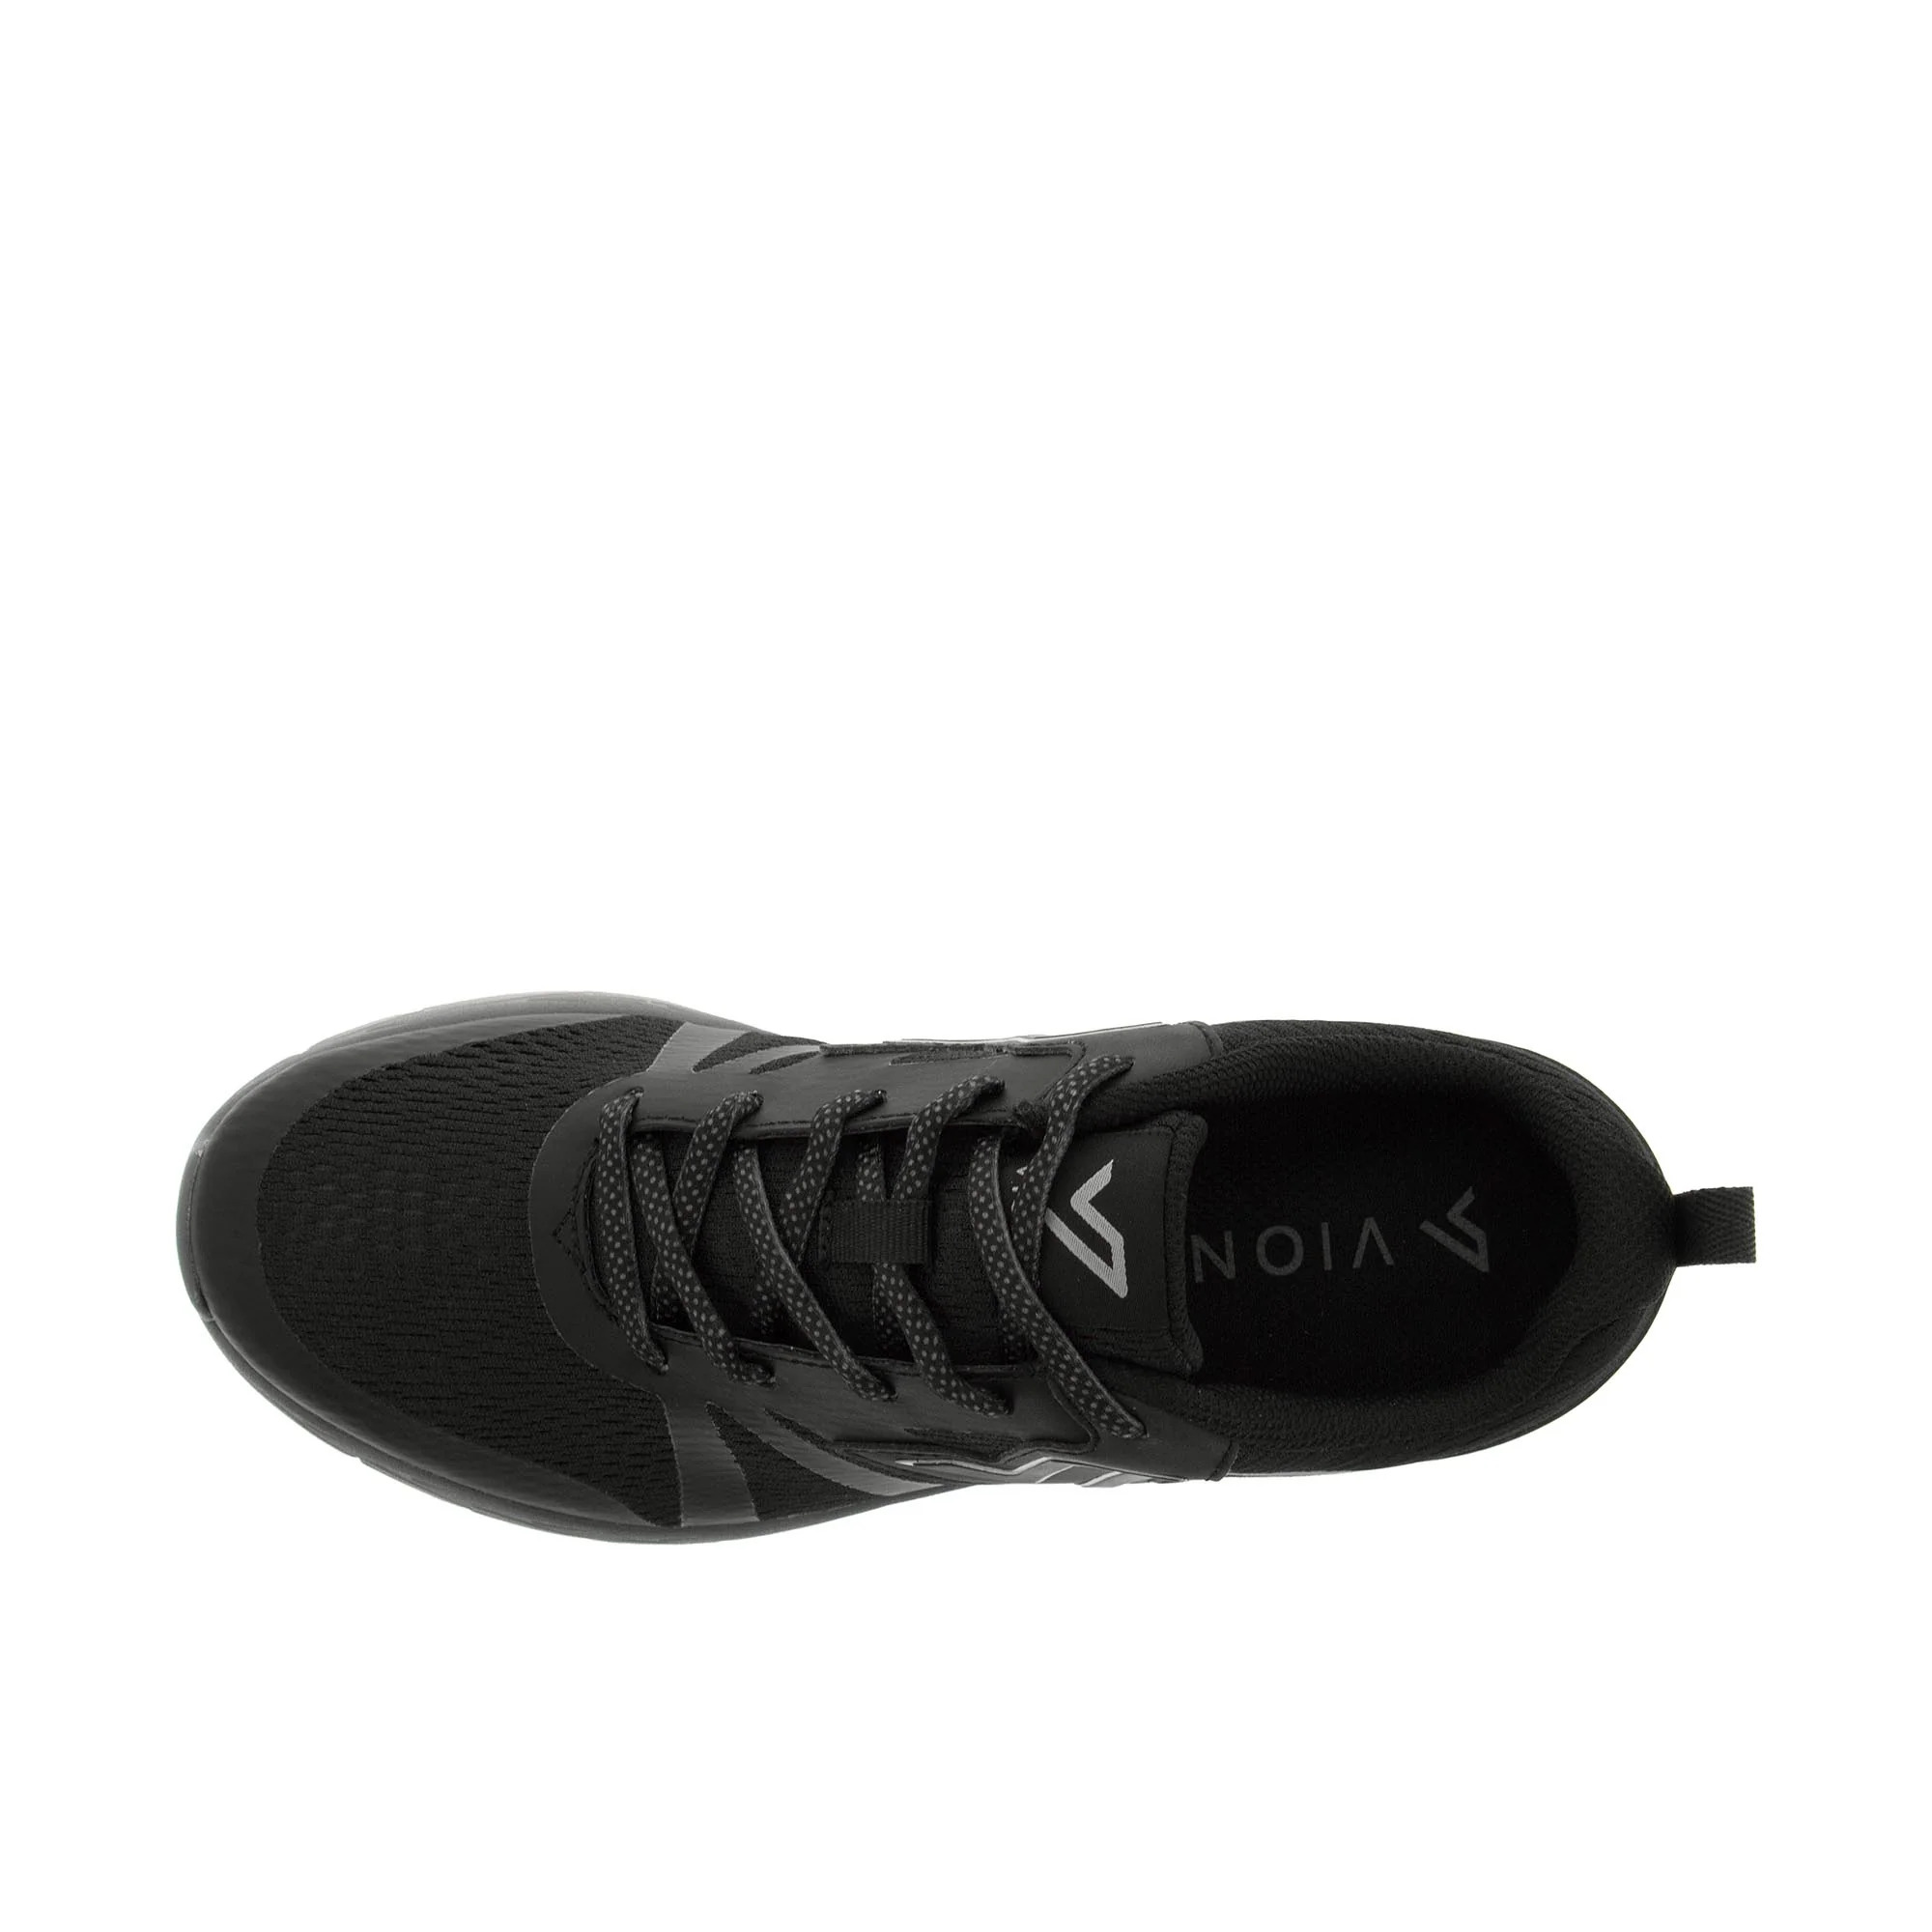 Vionic Miles Sneaker (Women's) - image 3 of 4